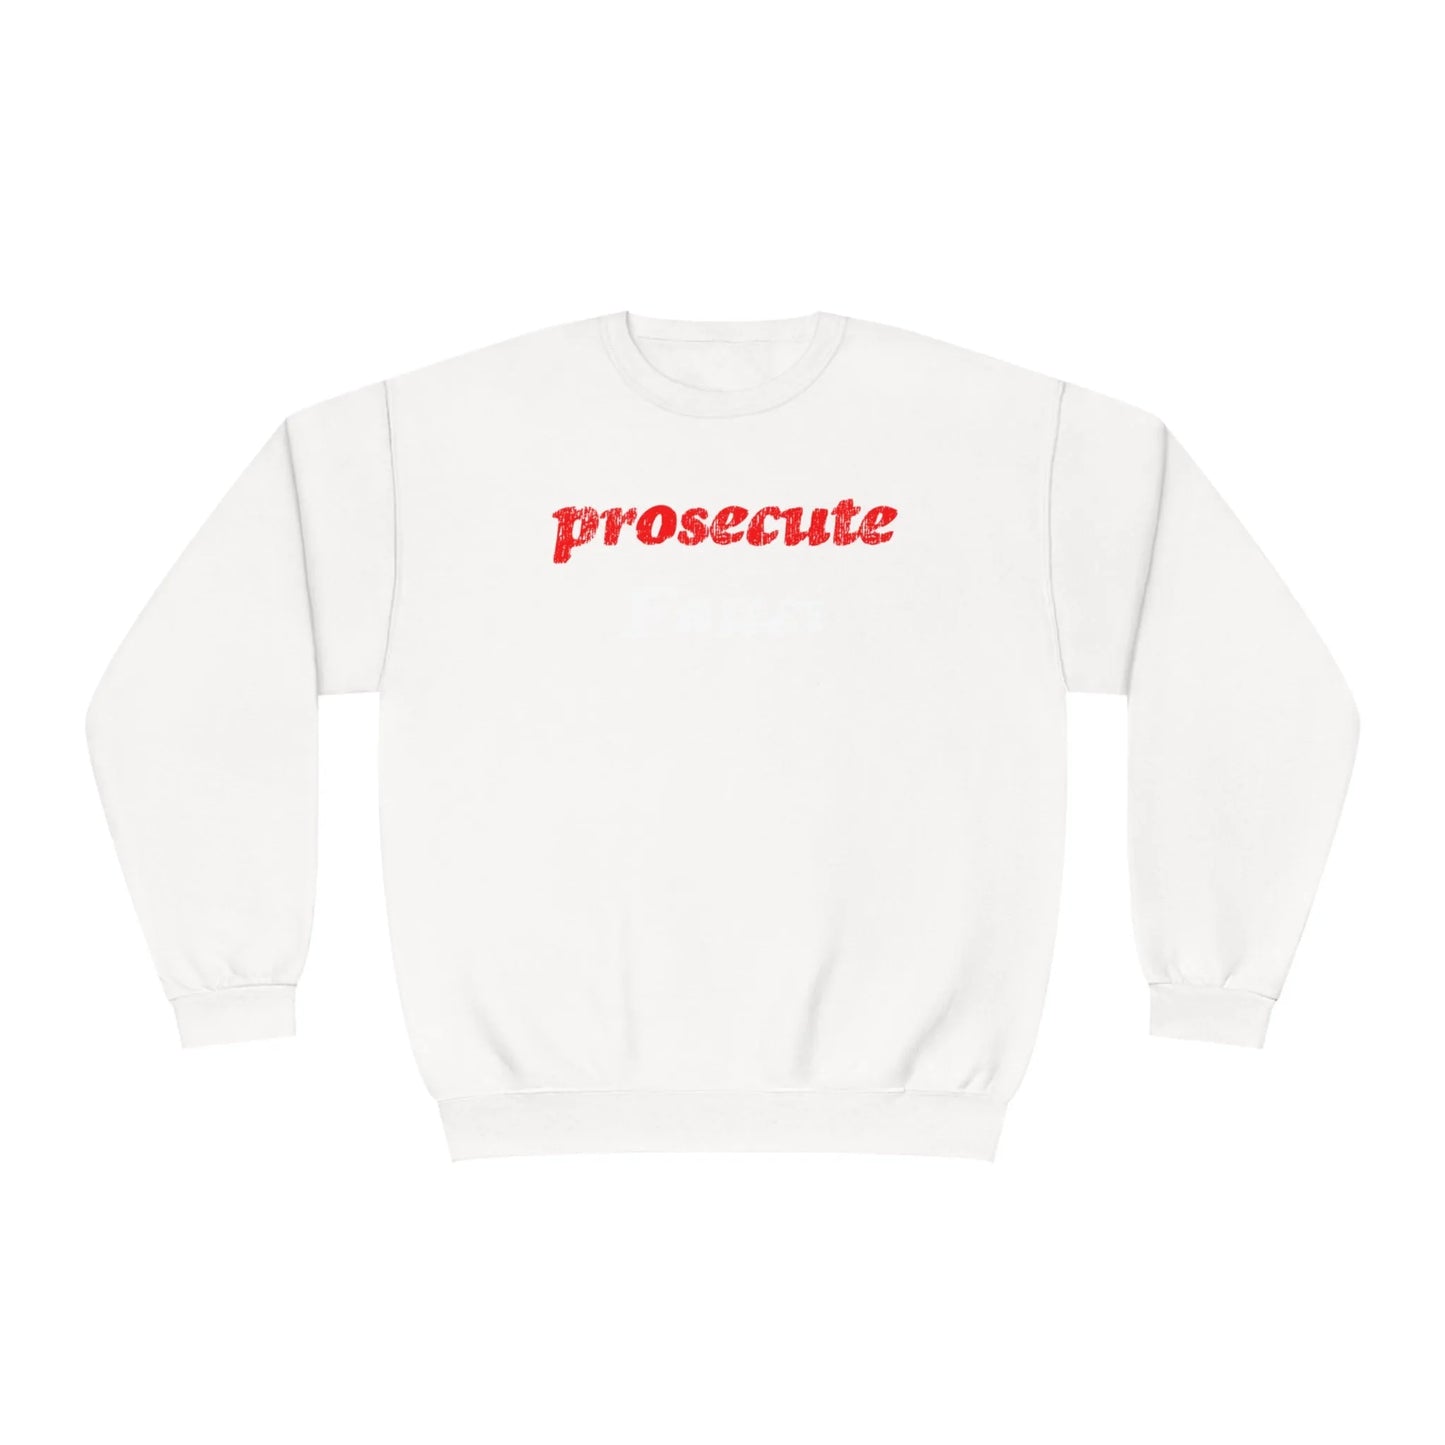 Prosecute Fauci Crewneck Sweatshirt